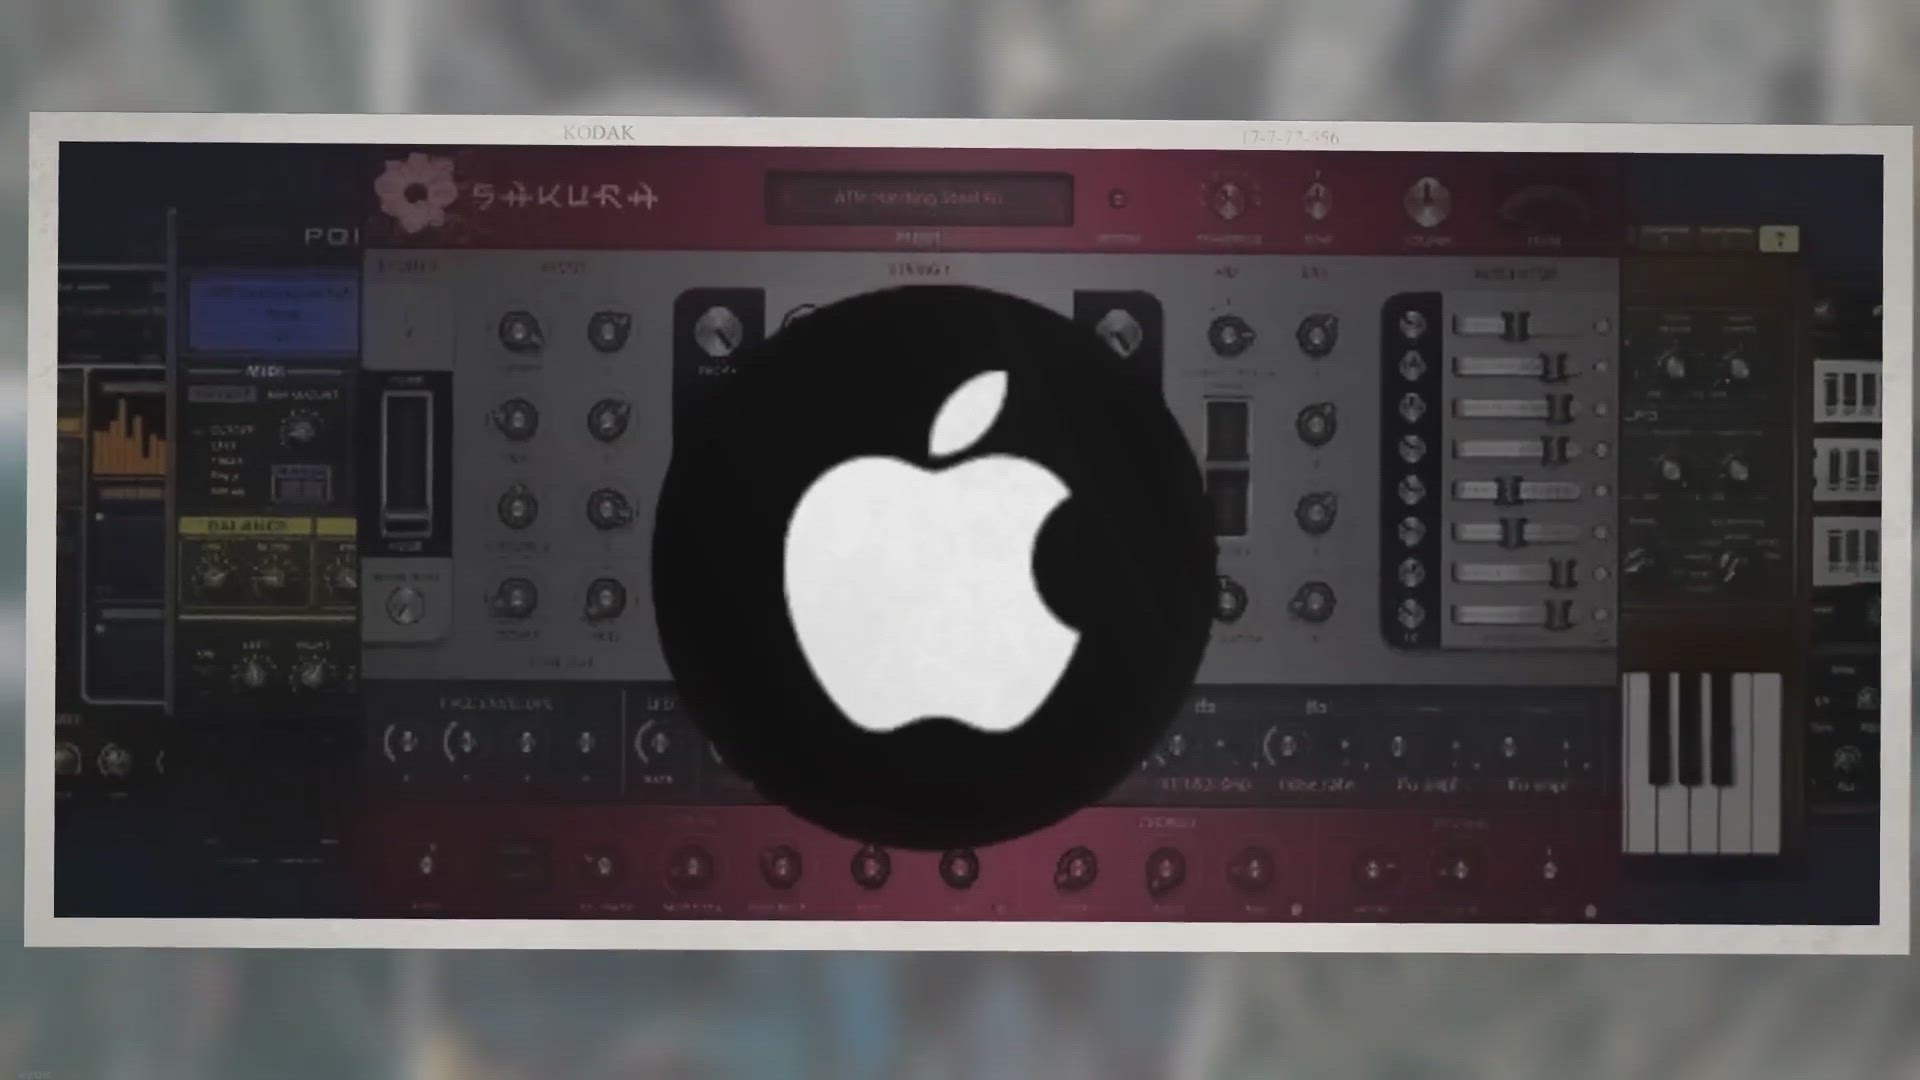 FL Studio is Coming to Fruity Mobiles iPhone, iPad - Well, Sort Of